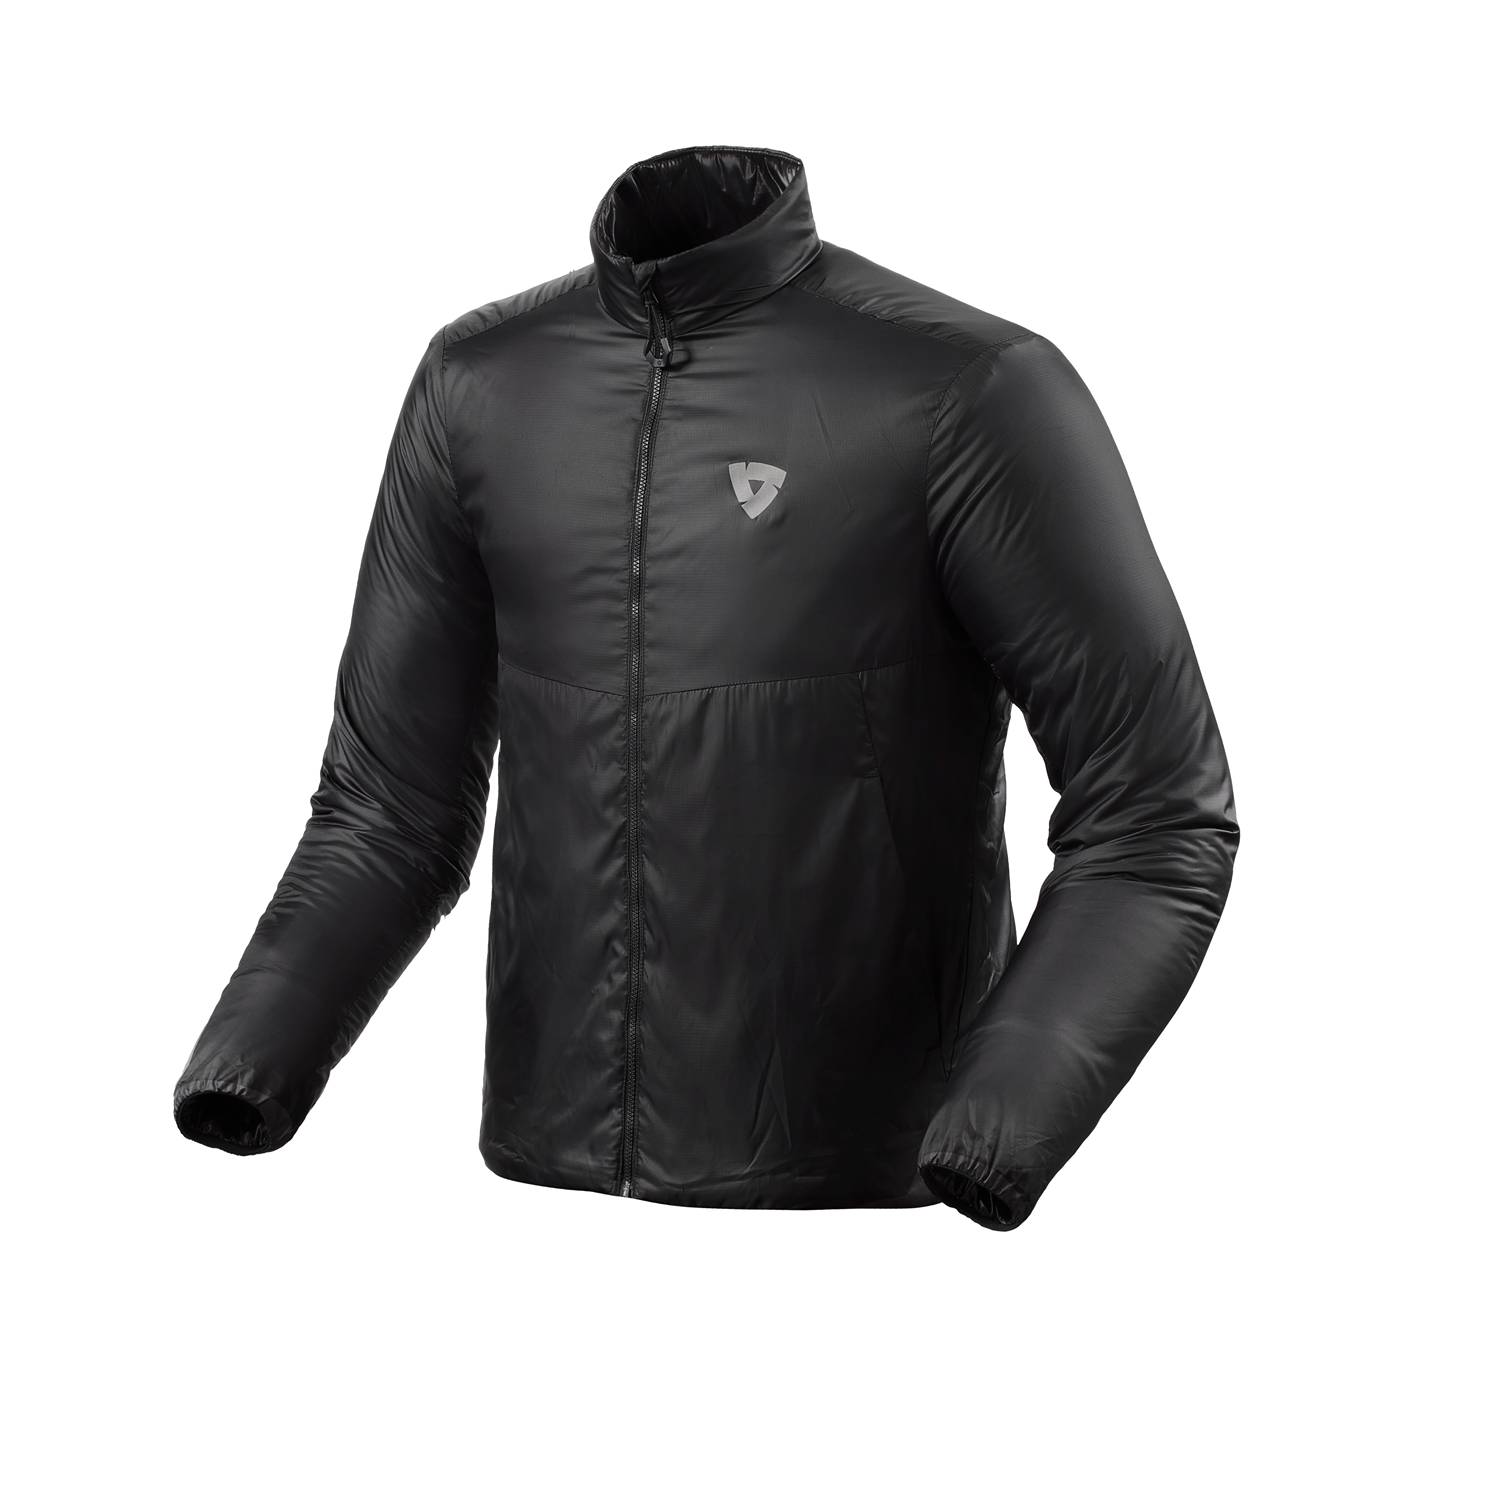 Image of REV'IT! Core 2 Mid Layer Jacket Black Size S EN